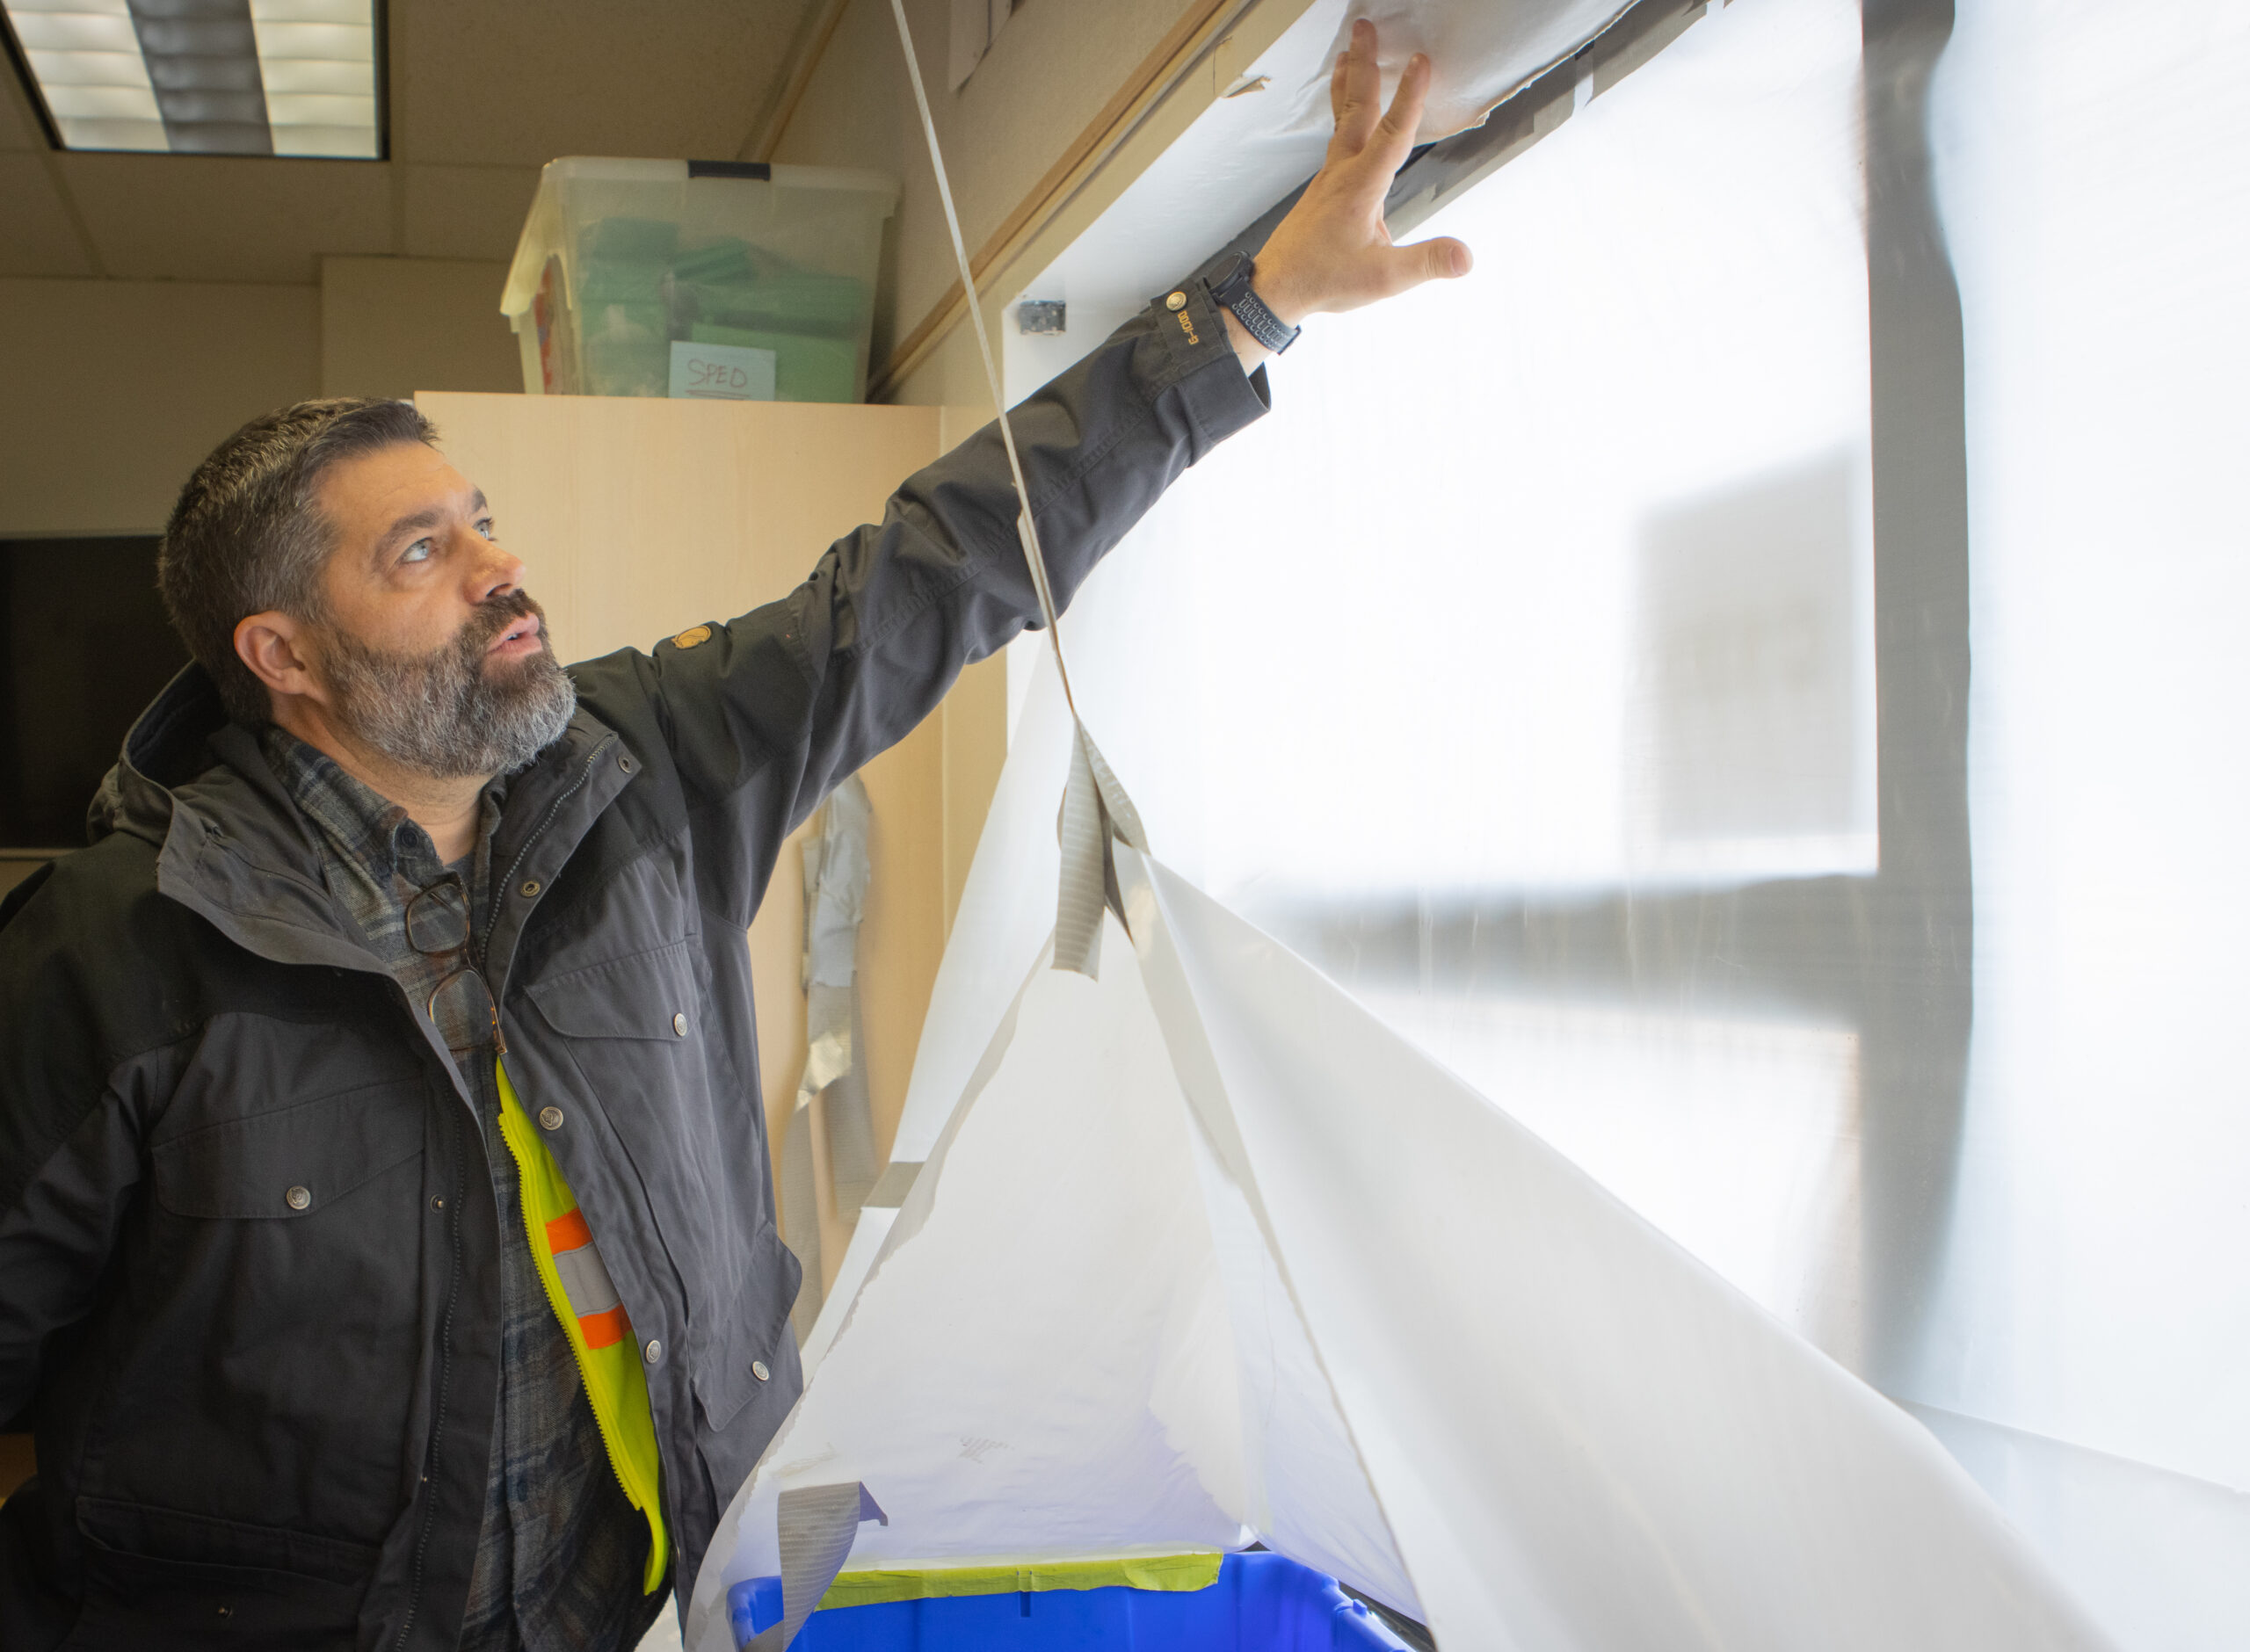 A man in a dark jacket examines a damaged window.